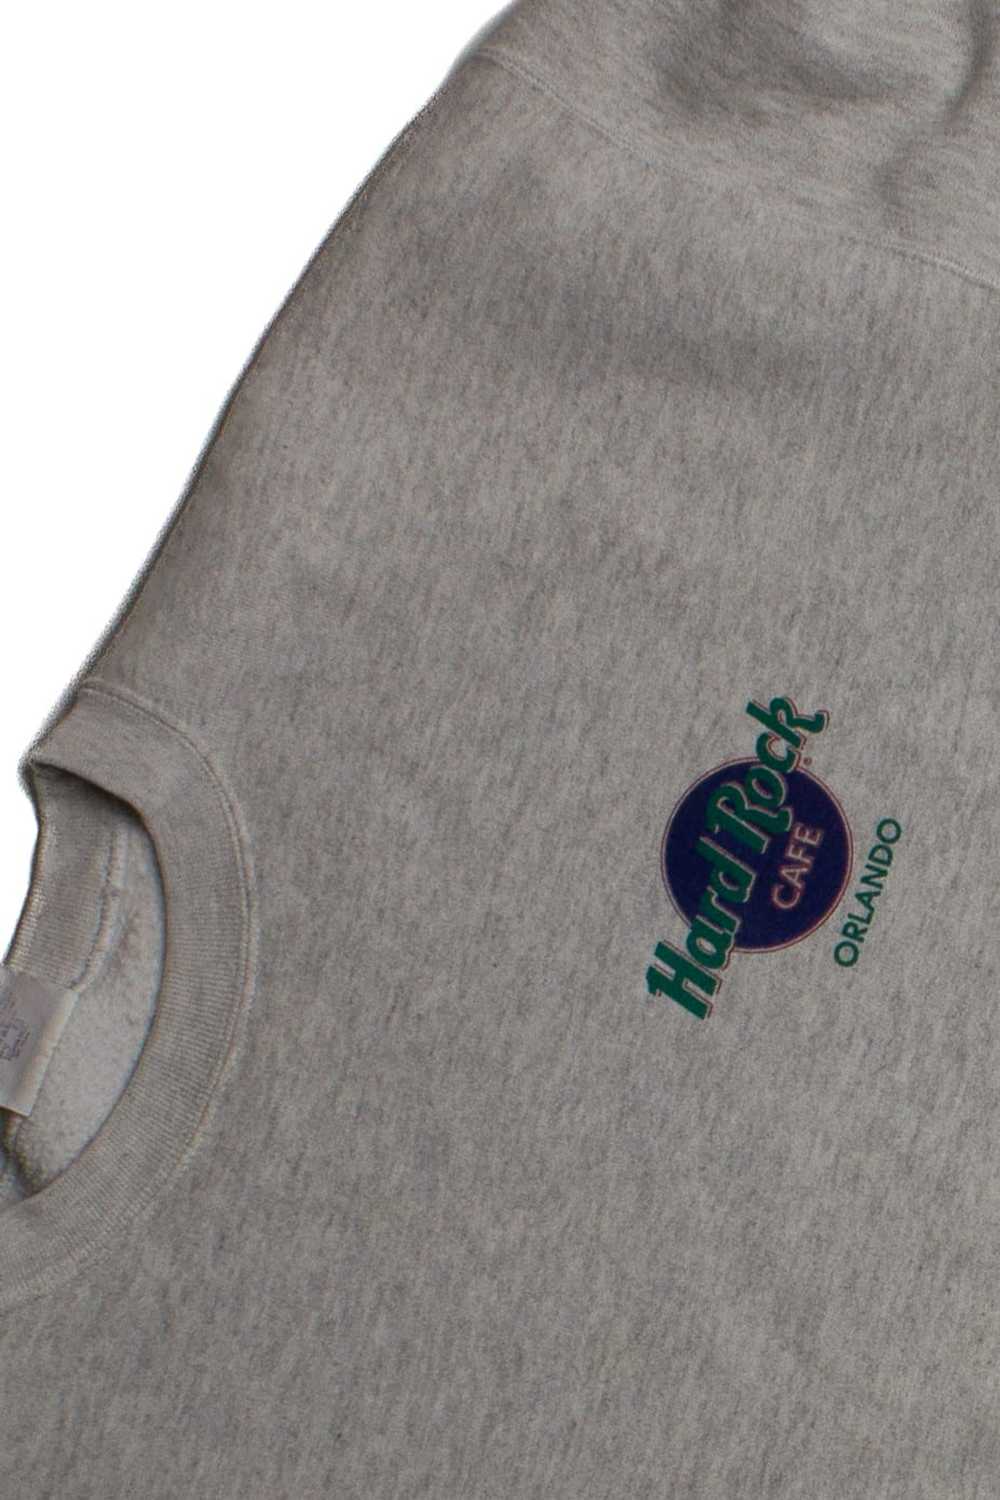 Vintage Hard Rock Cafe Sweatshirt (1990s)8801 - image 2